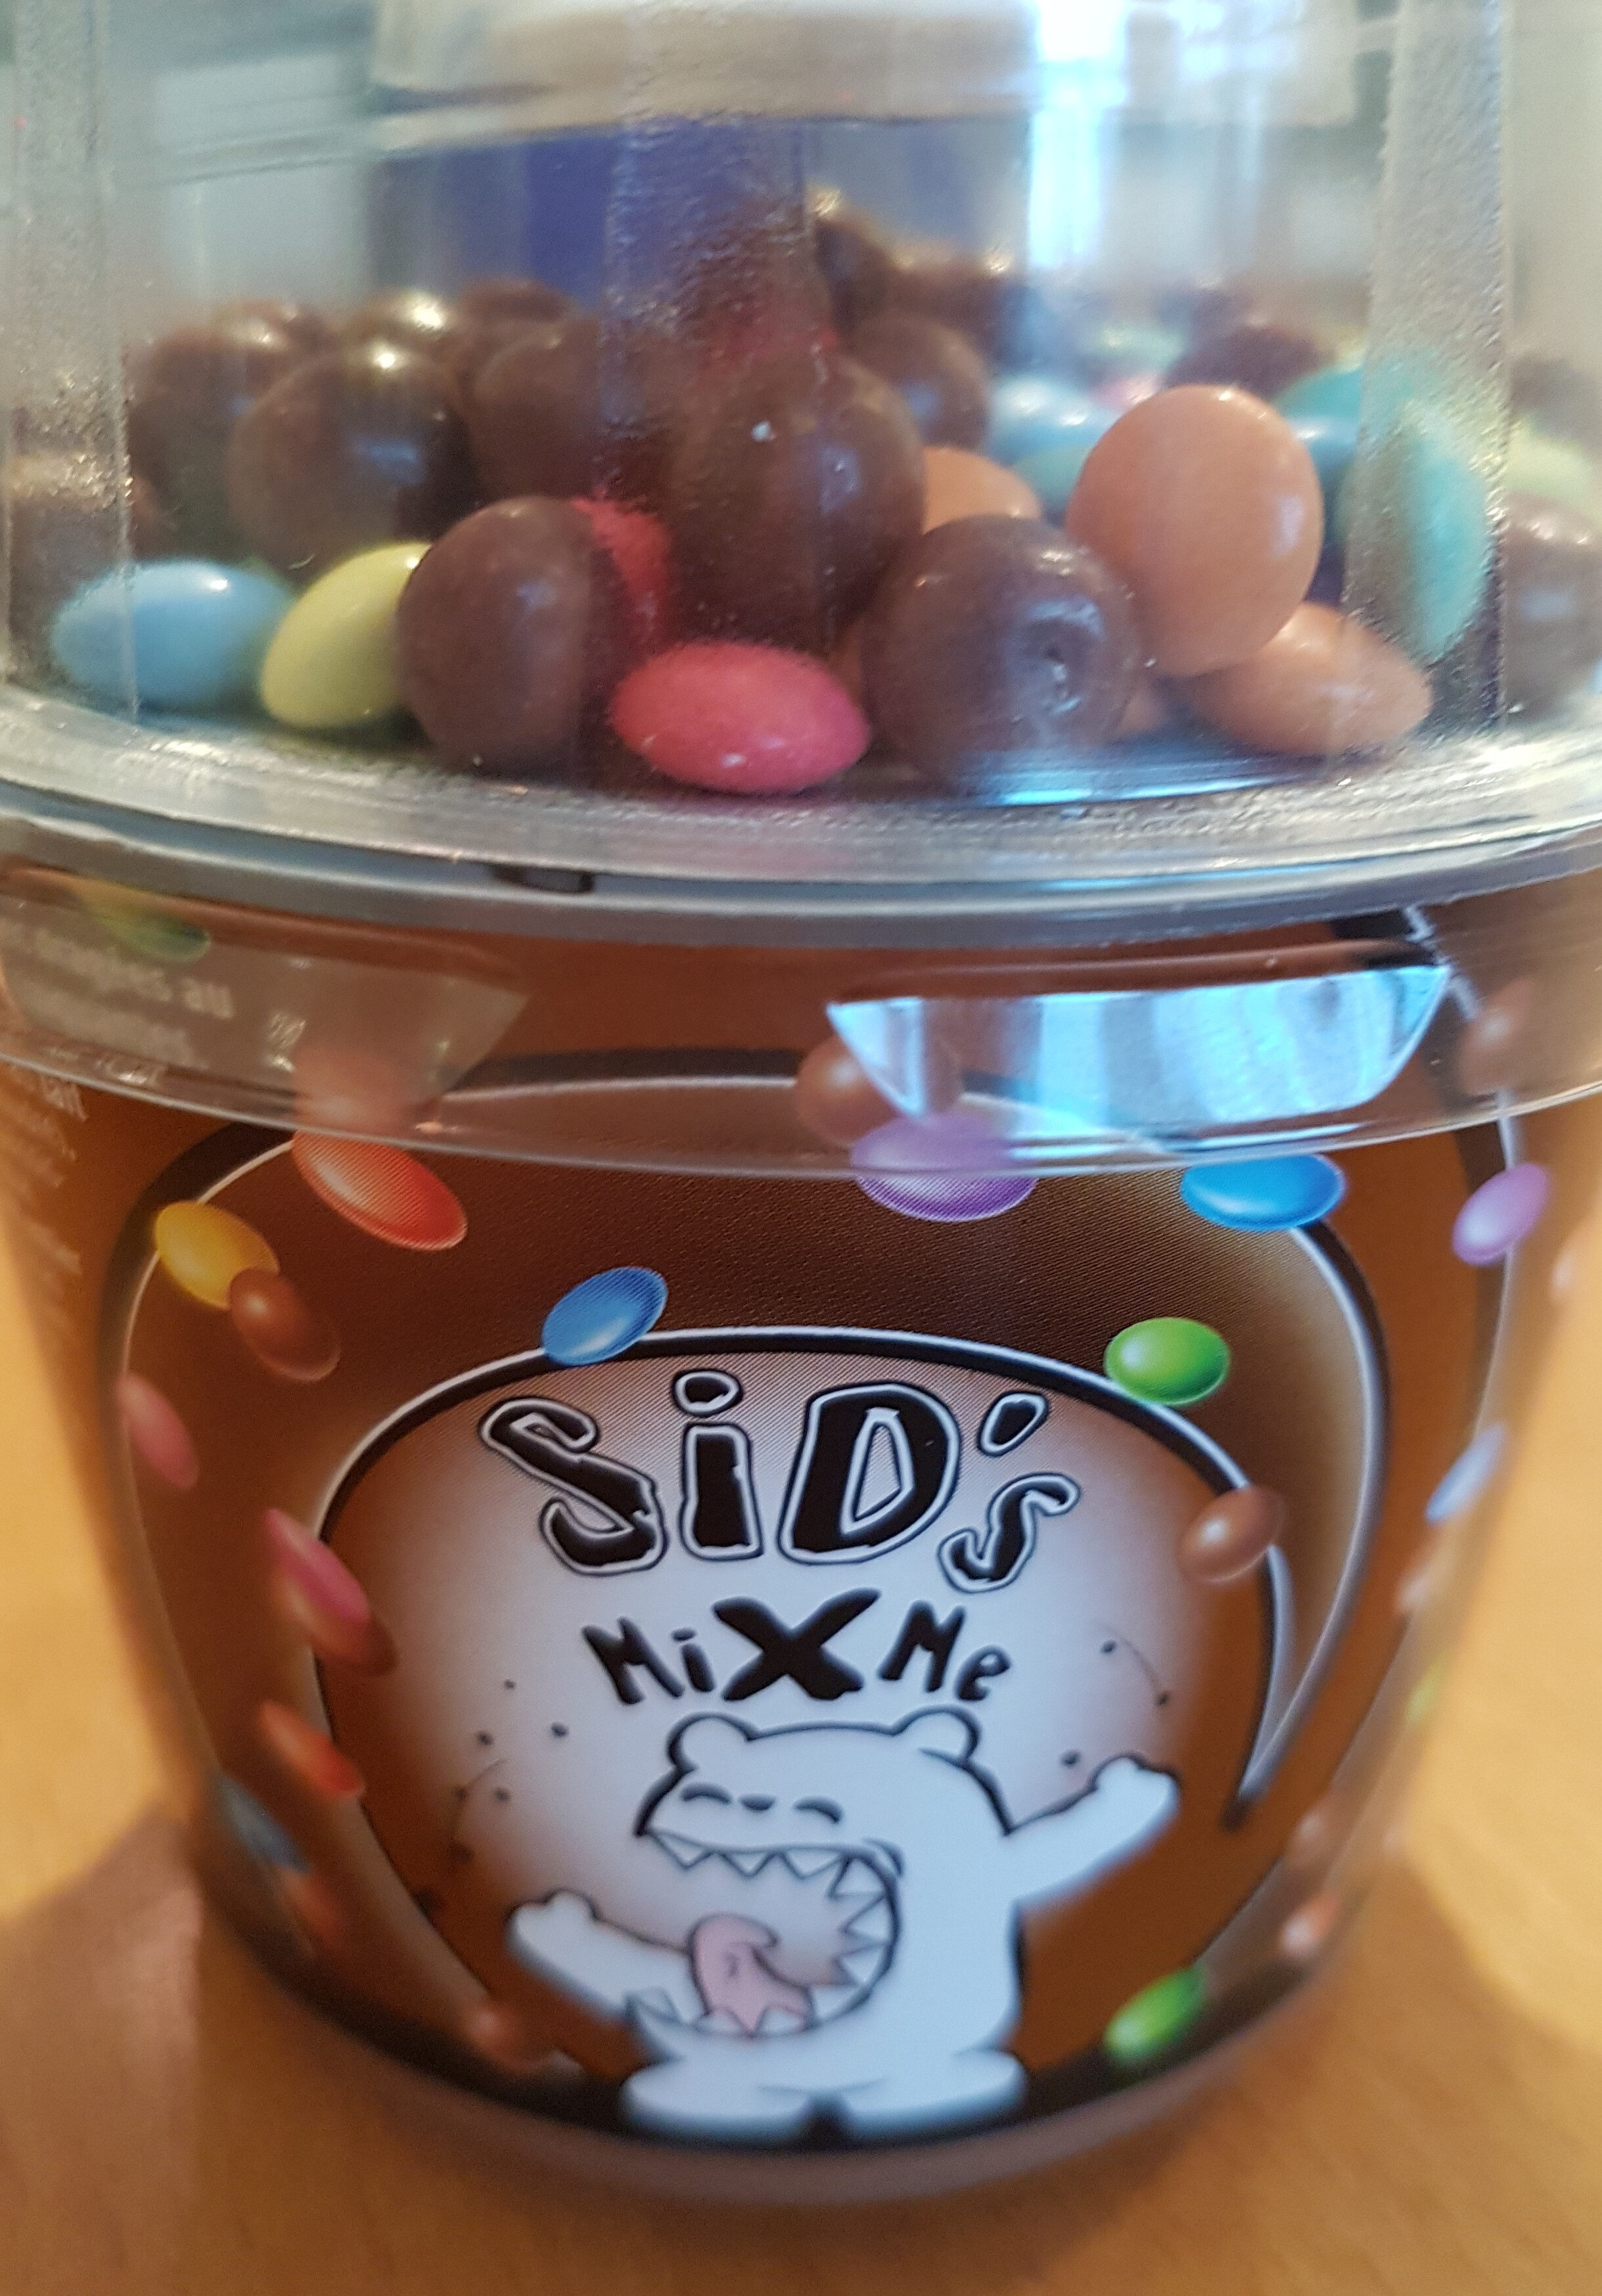 Sid's MixMe Chococream - Product - fr